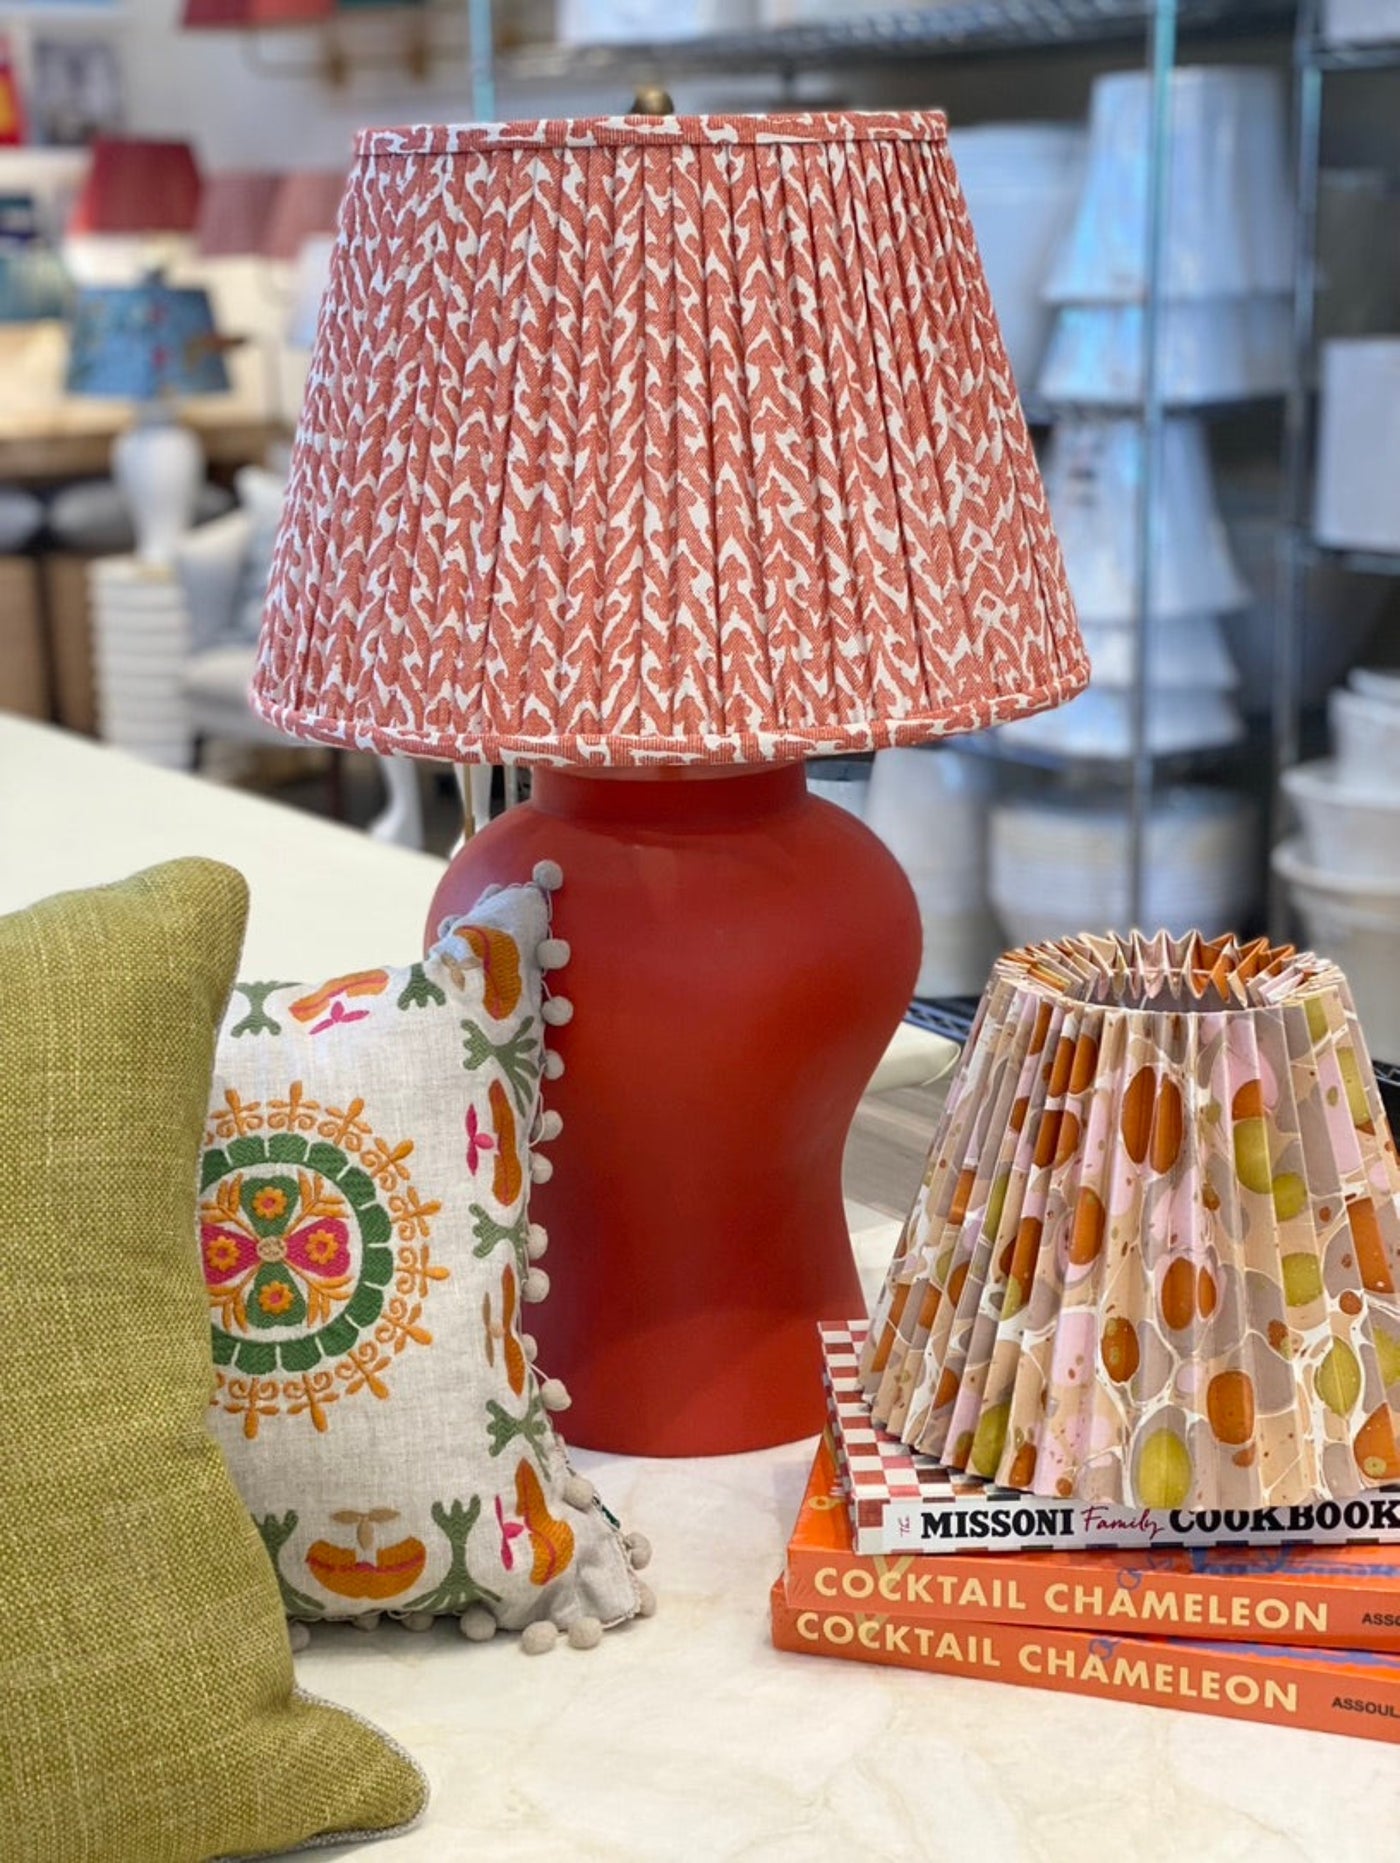 Orange lamp and Fermoie lampshade